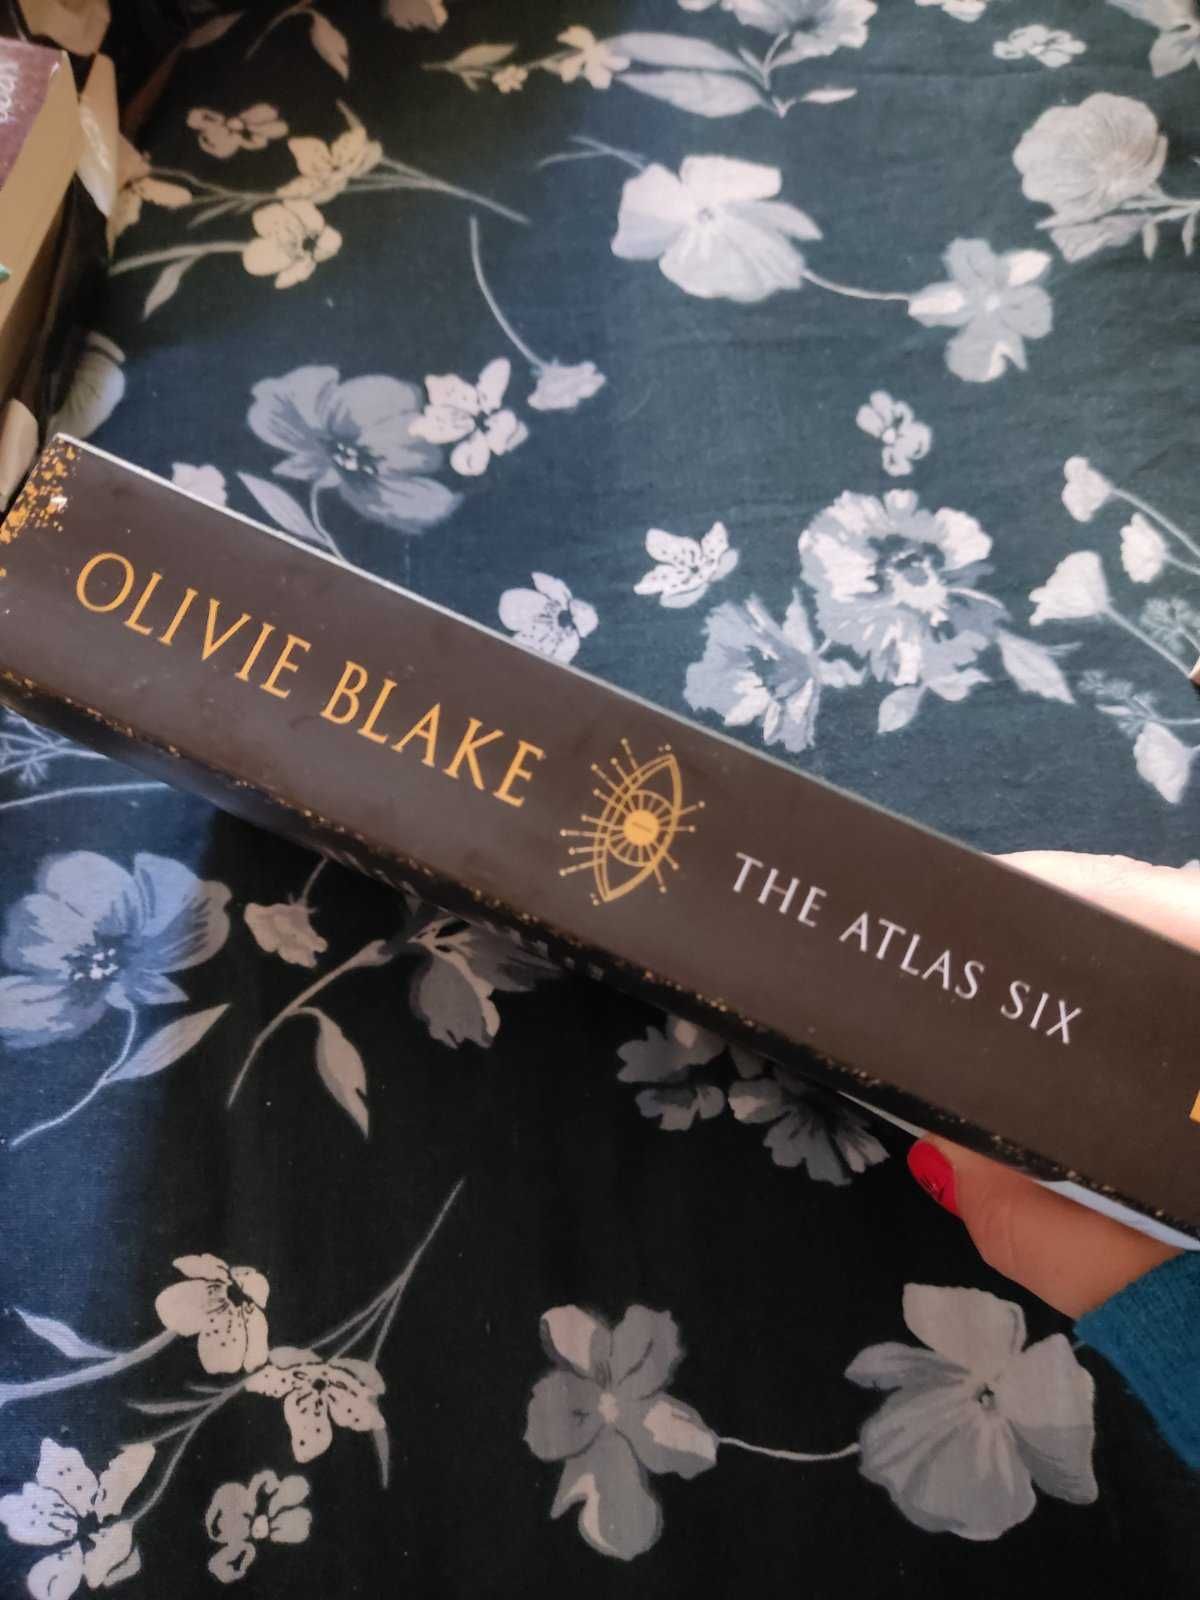 Книга
The Atlas Six, Olivie Blake, на английски